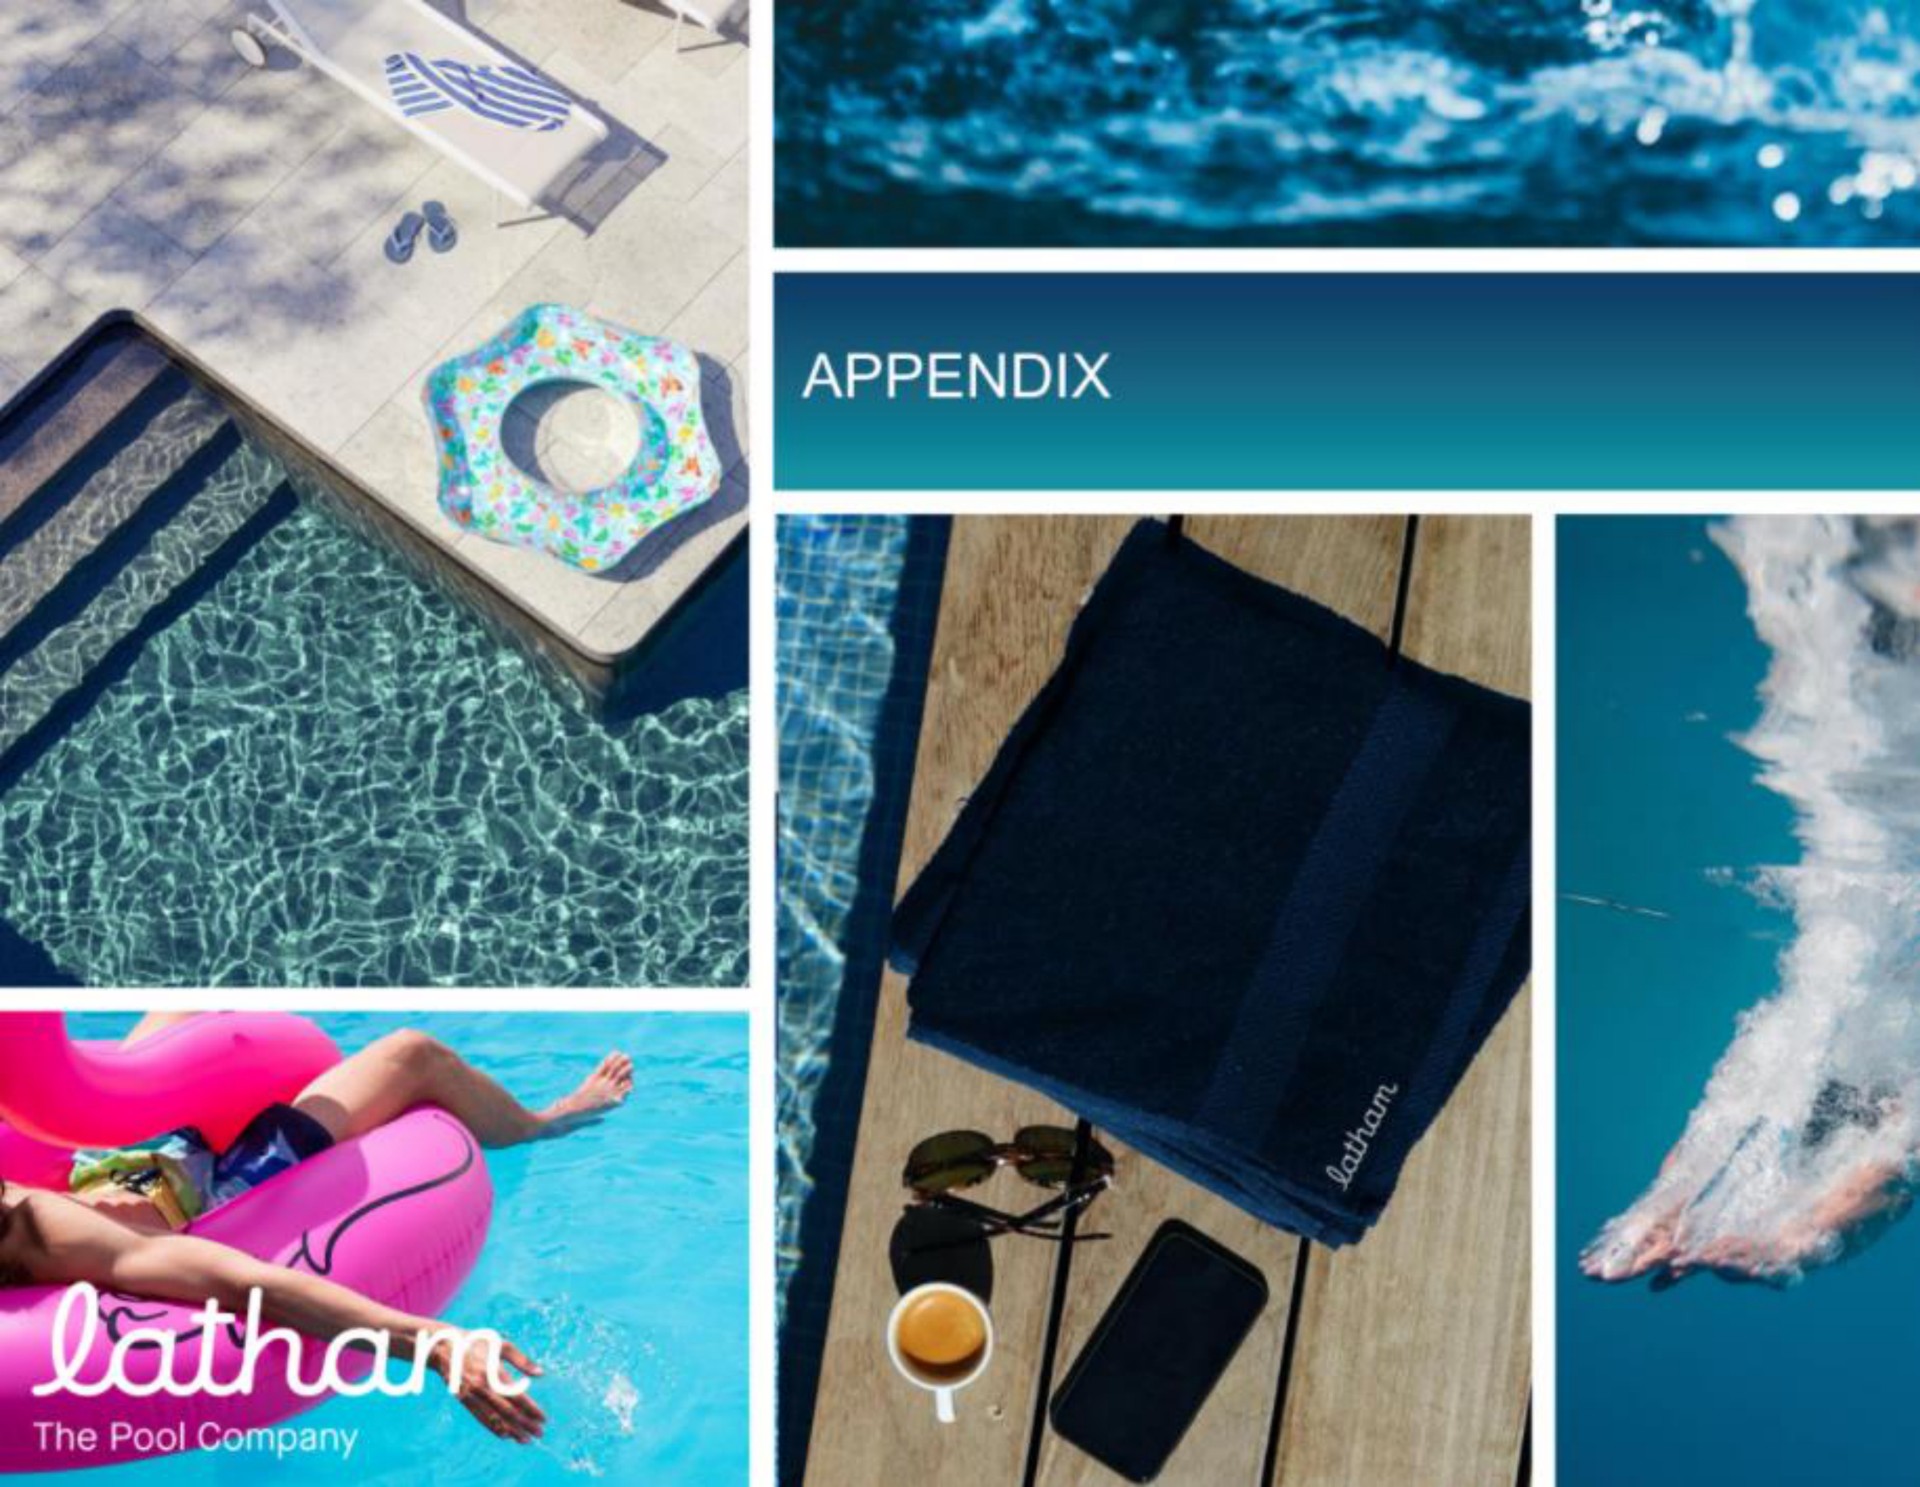 appendix | Latham Pool Company